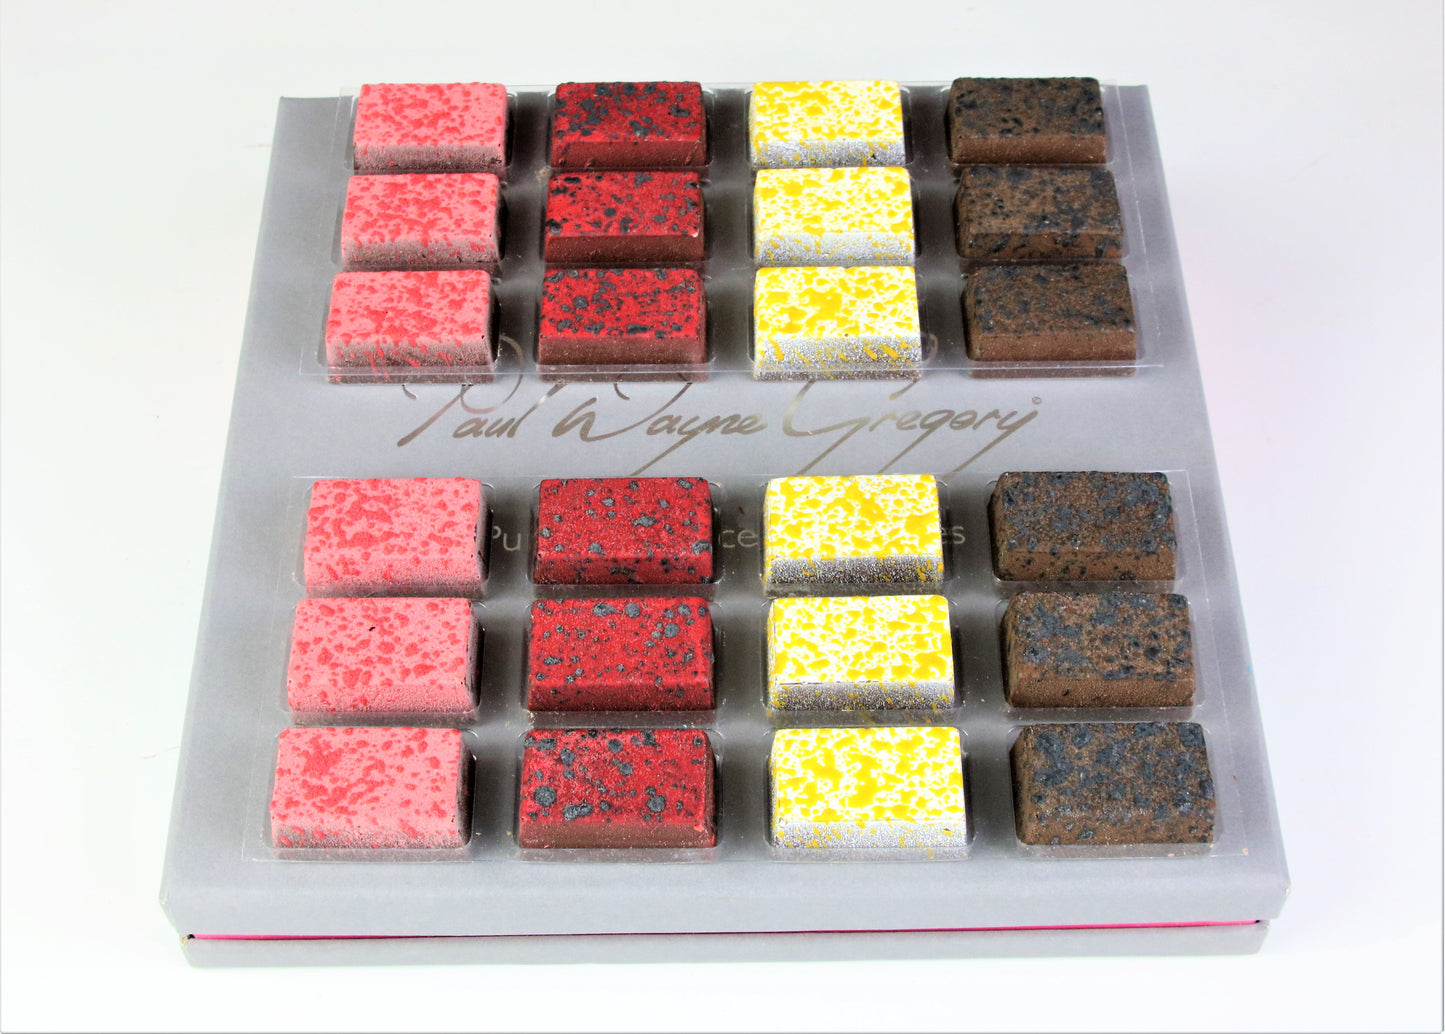 Art Range Two - Box of 24 Hand Crafted Chocolates